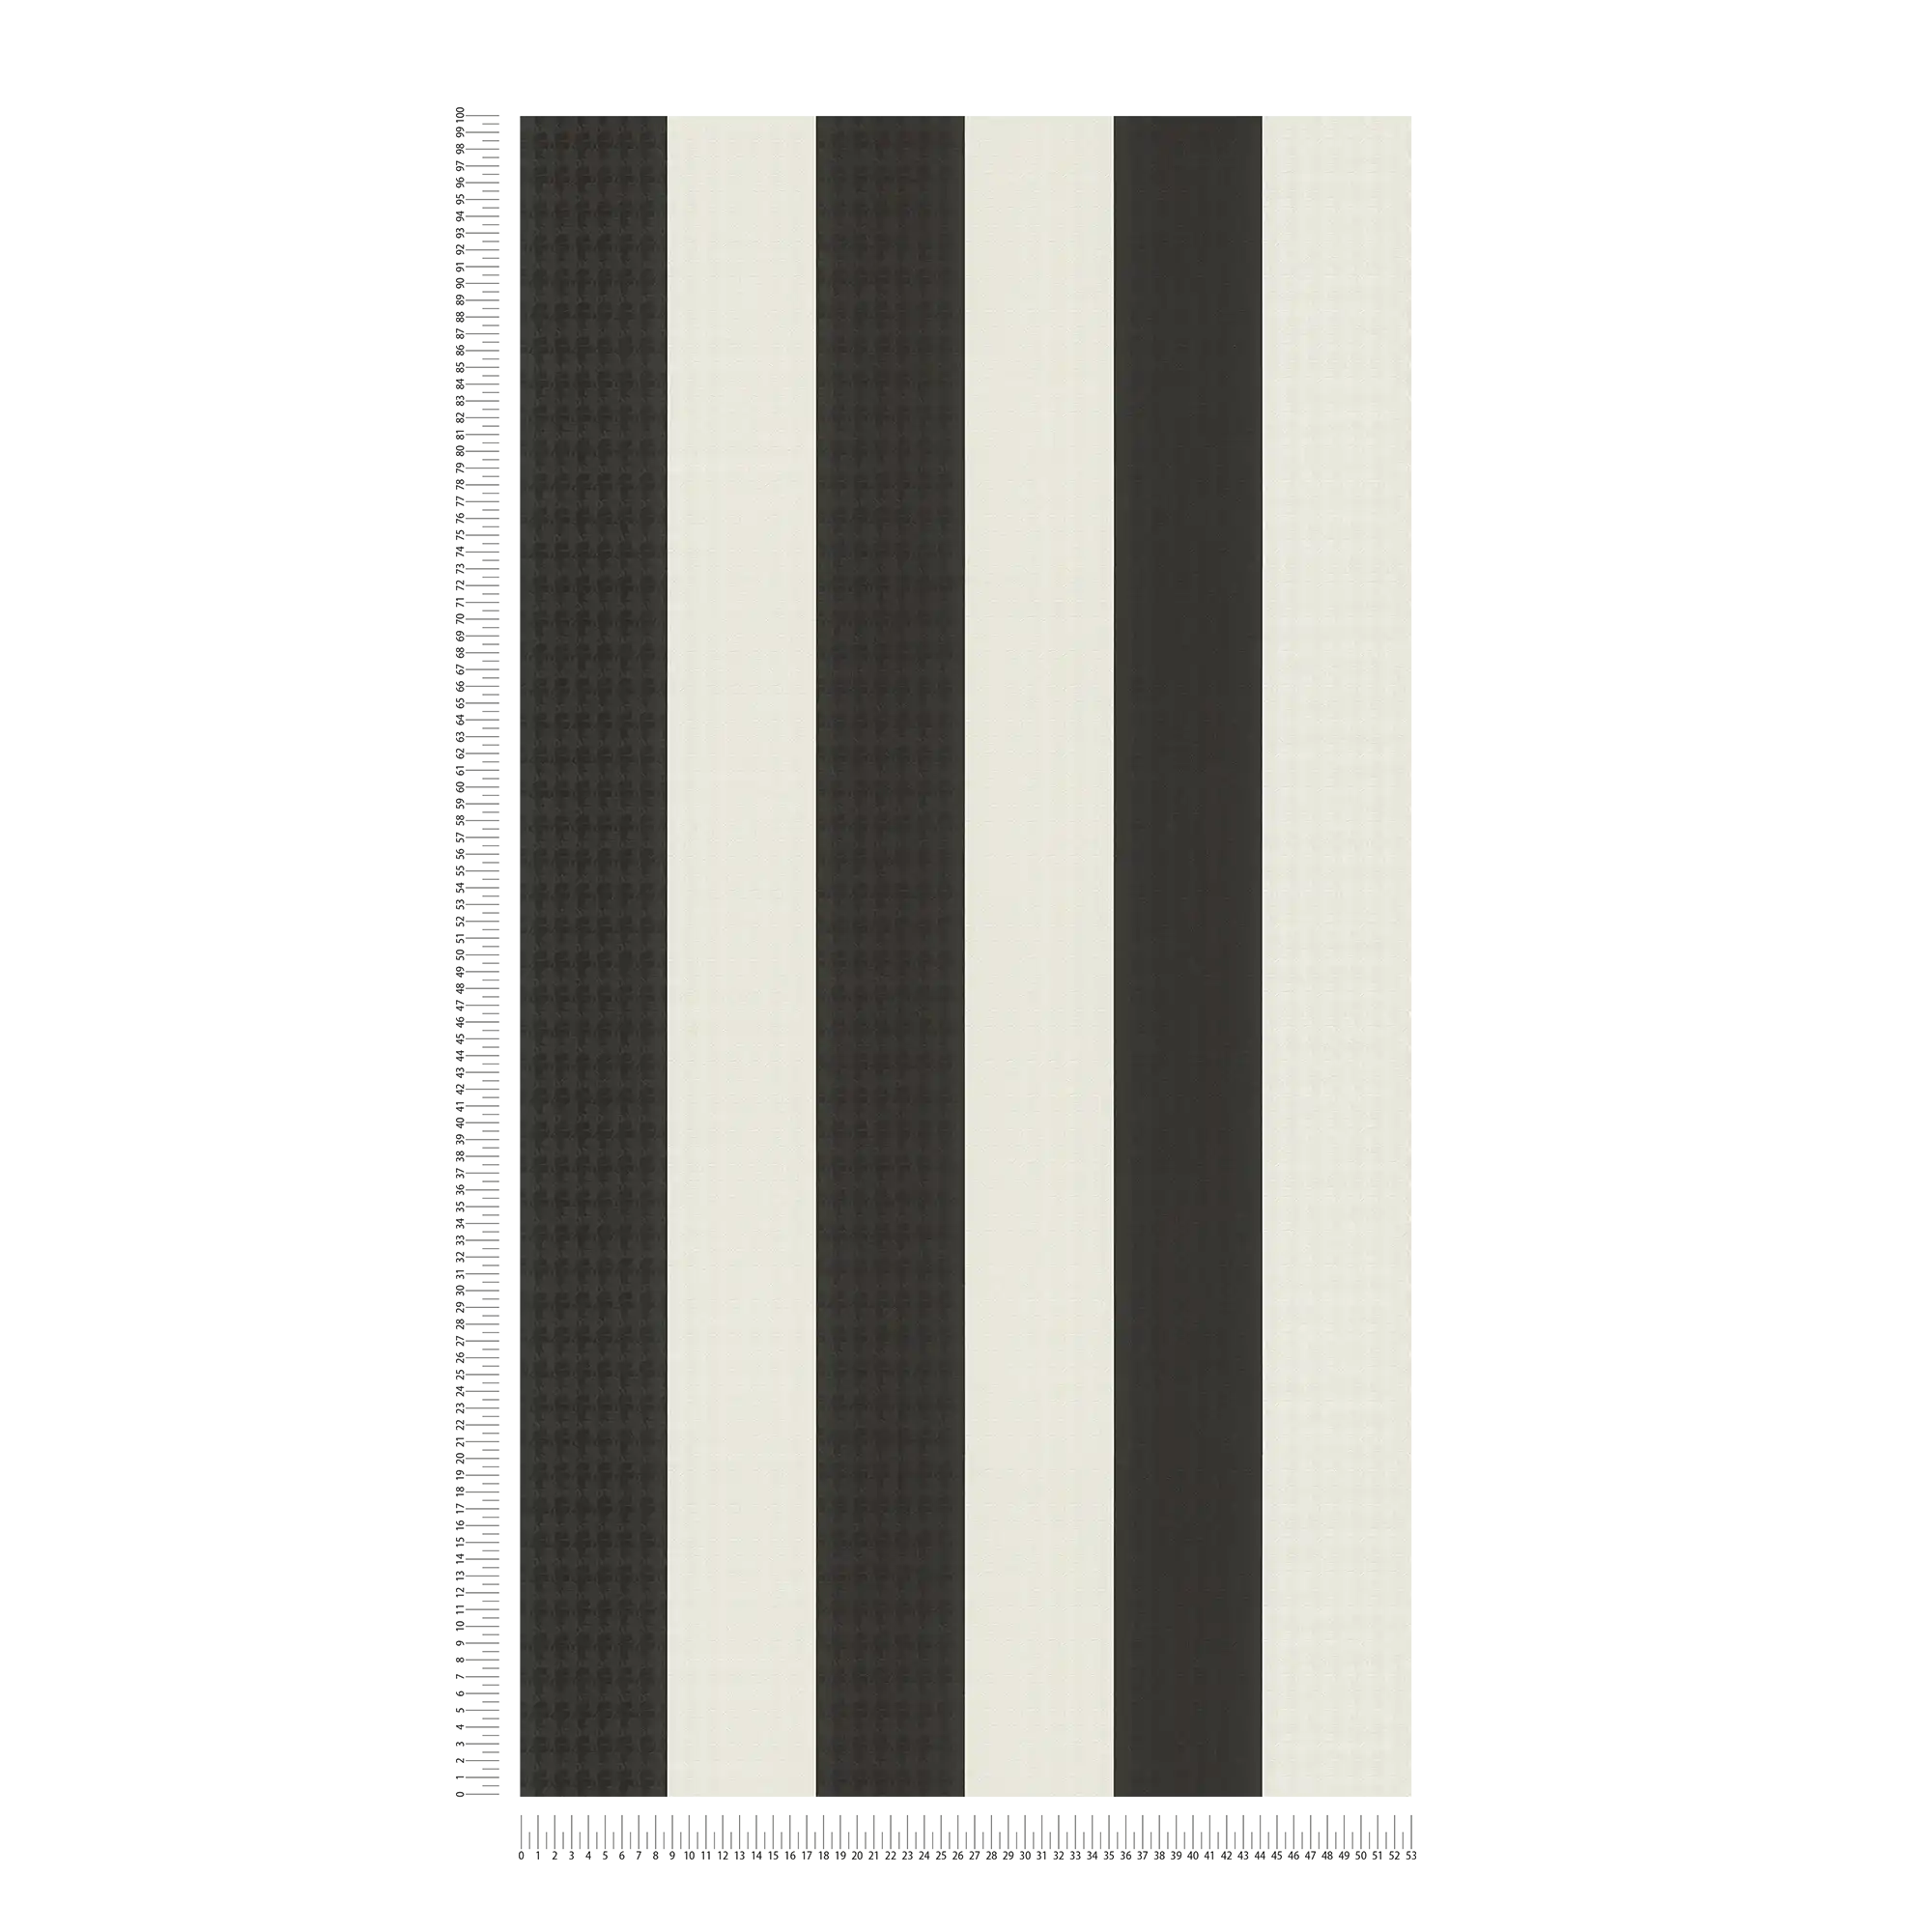             Papel pintado Karl LAGERFELD rayas y textura - negro, blanco
        